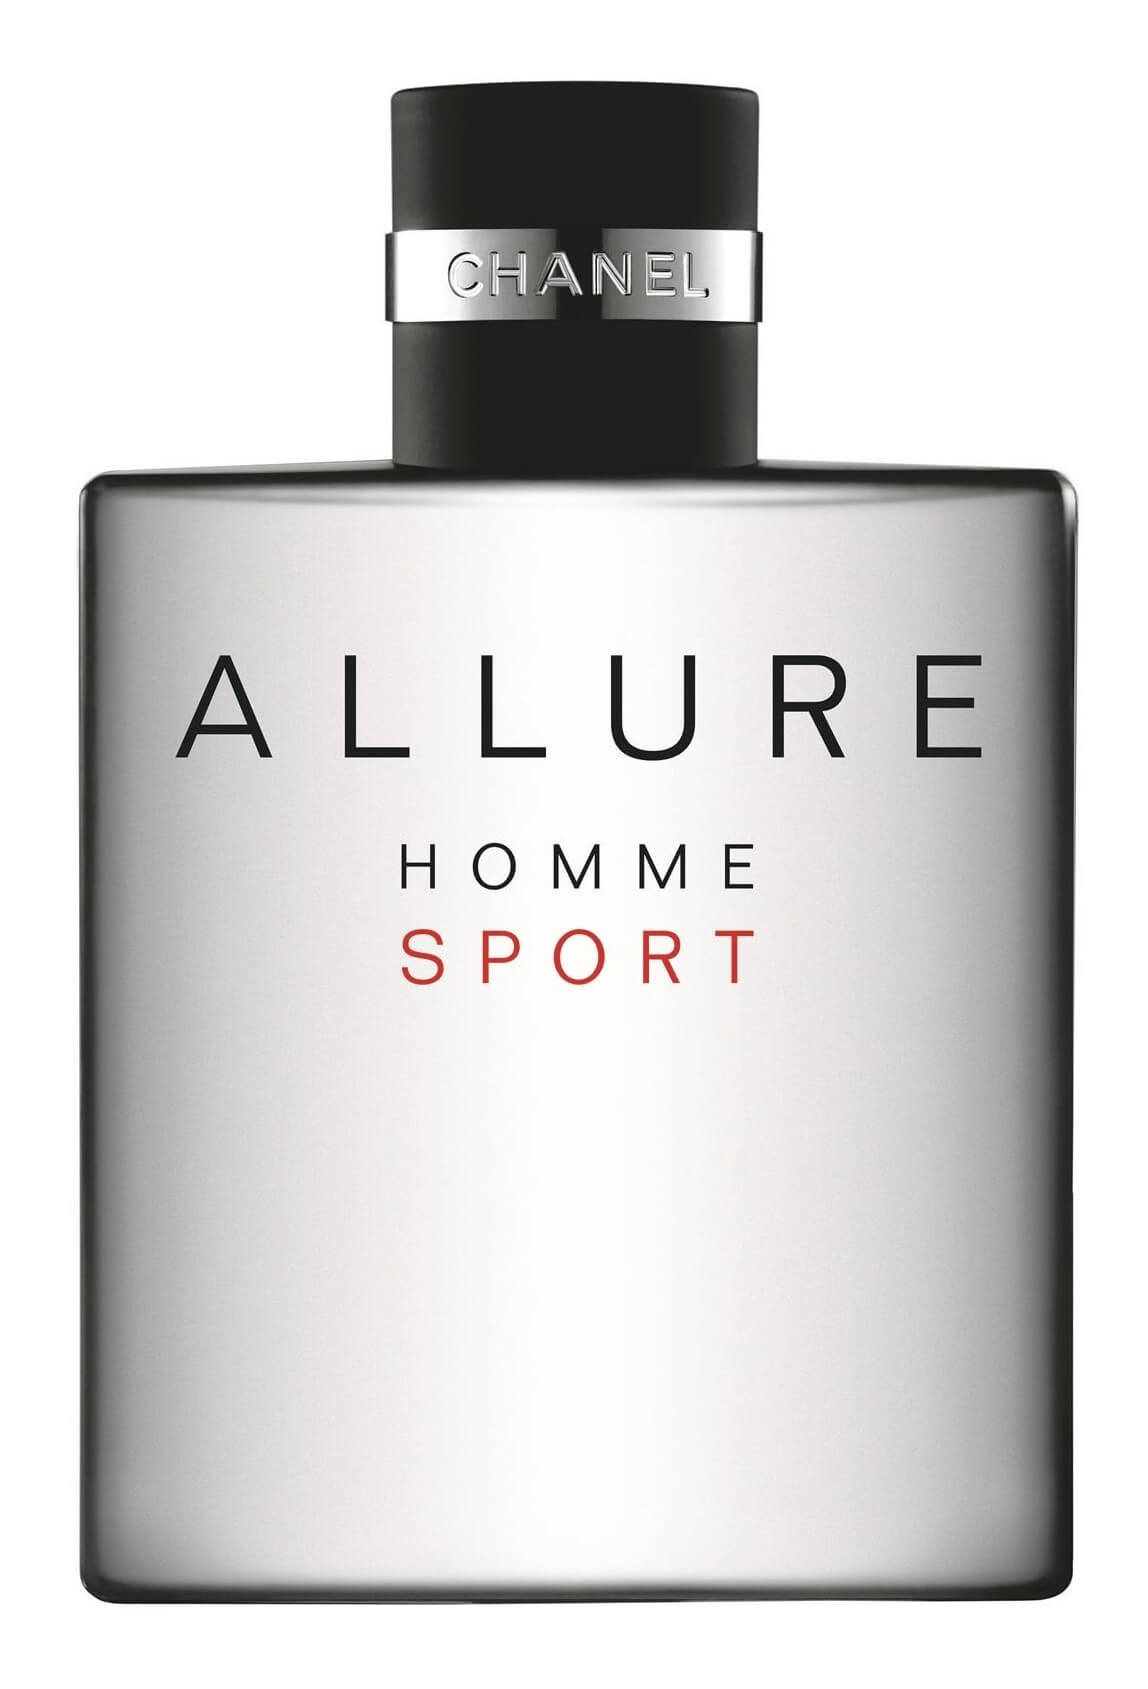 Home sport 1. Шанель Аллюр спорт 100мл. Chanel Allure homme Sport. Chanel Allure homme Sport 100ml. Chanel Allure homme Sport EDT 100 ml.